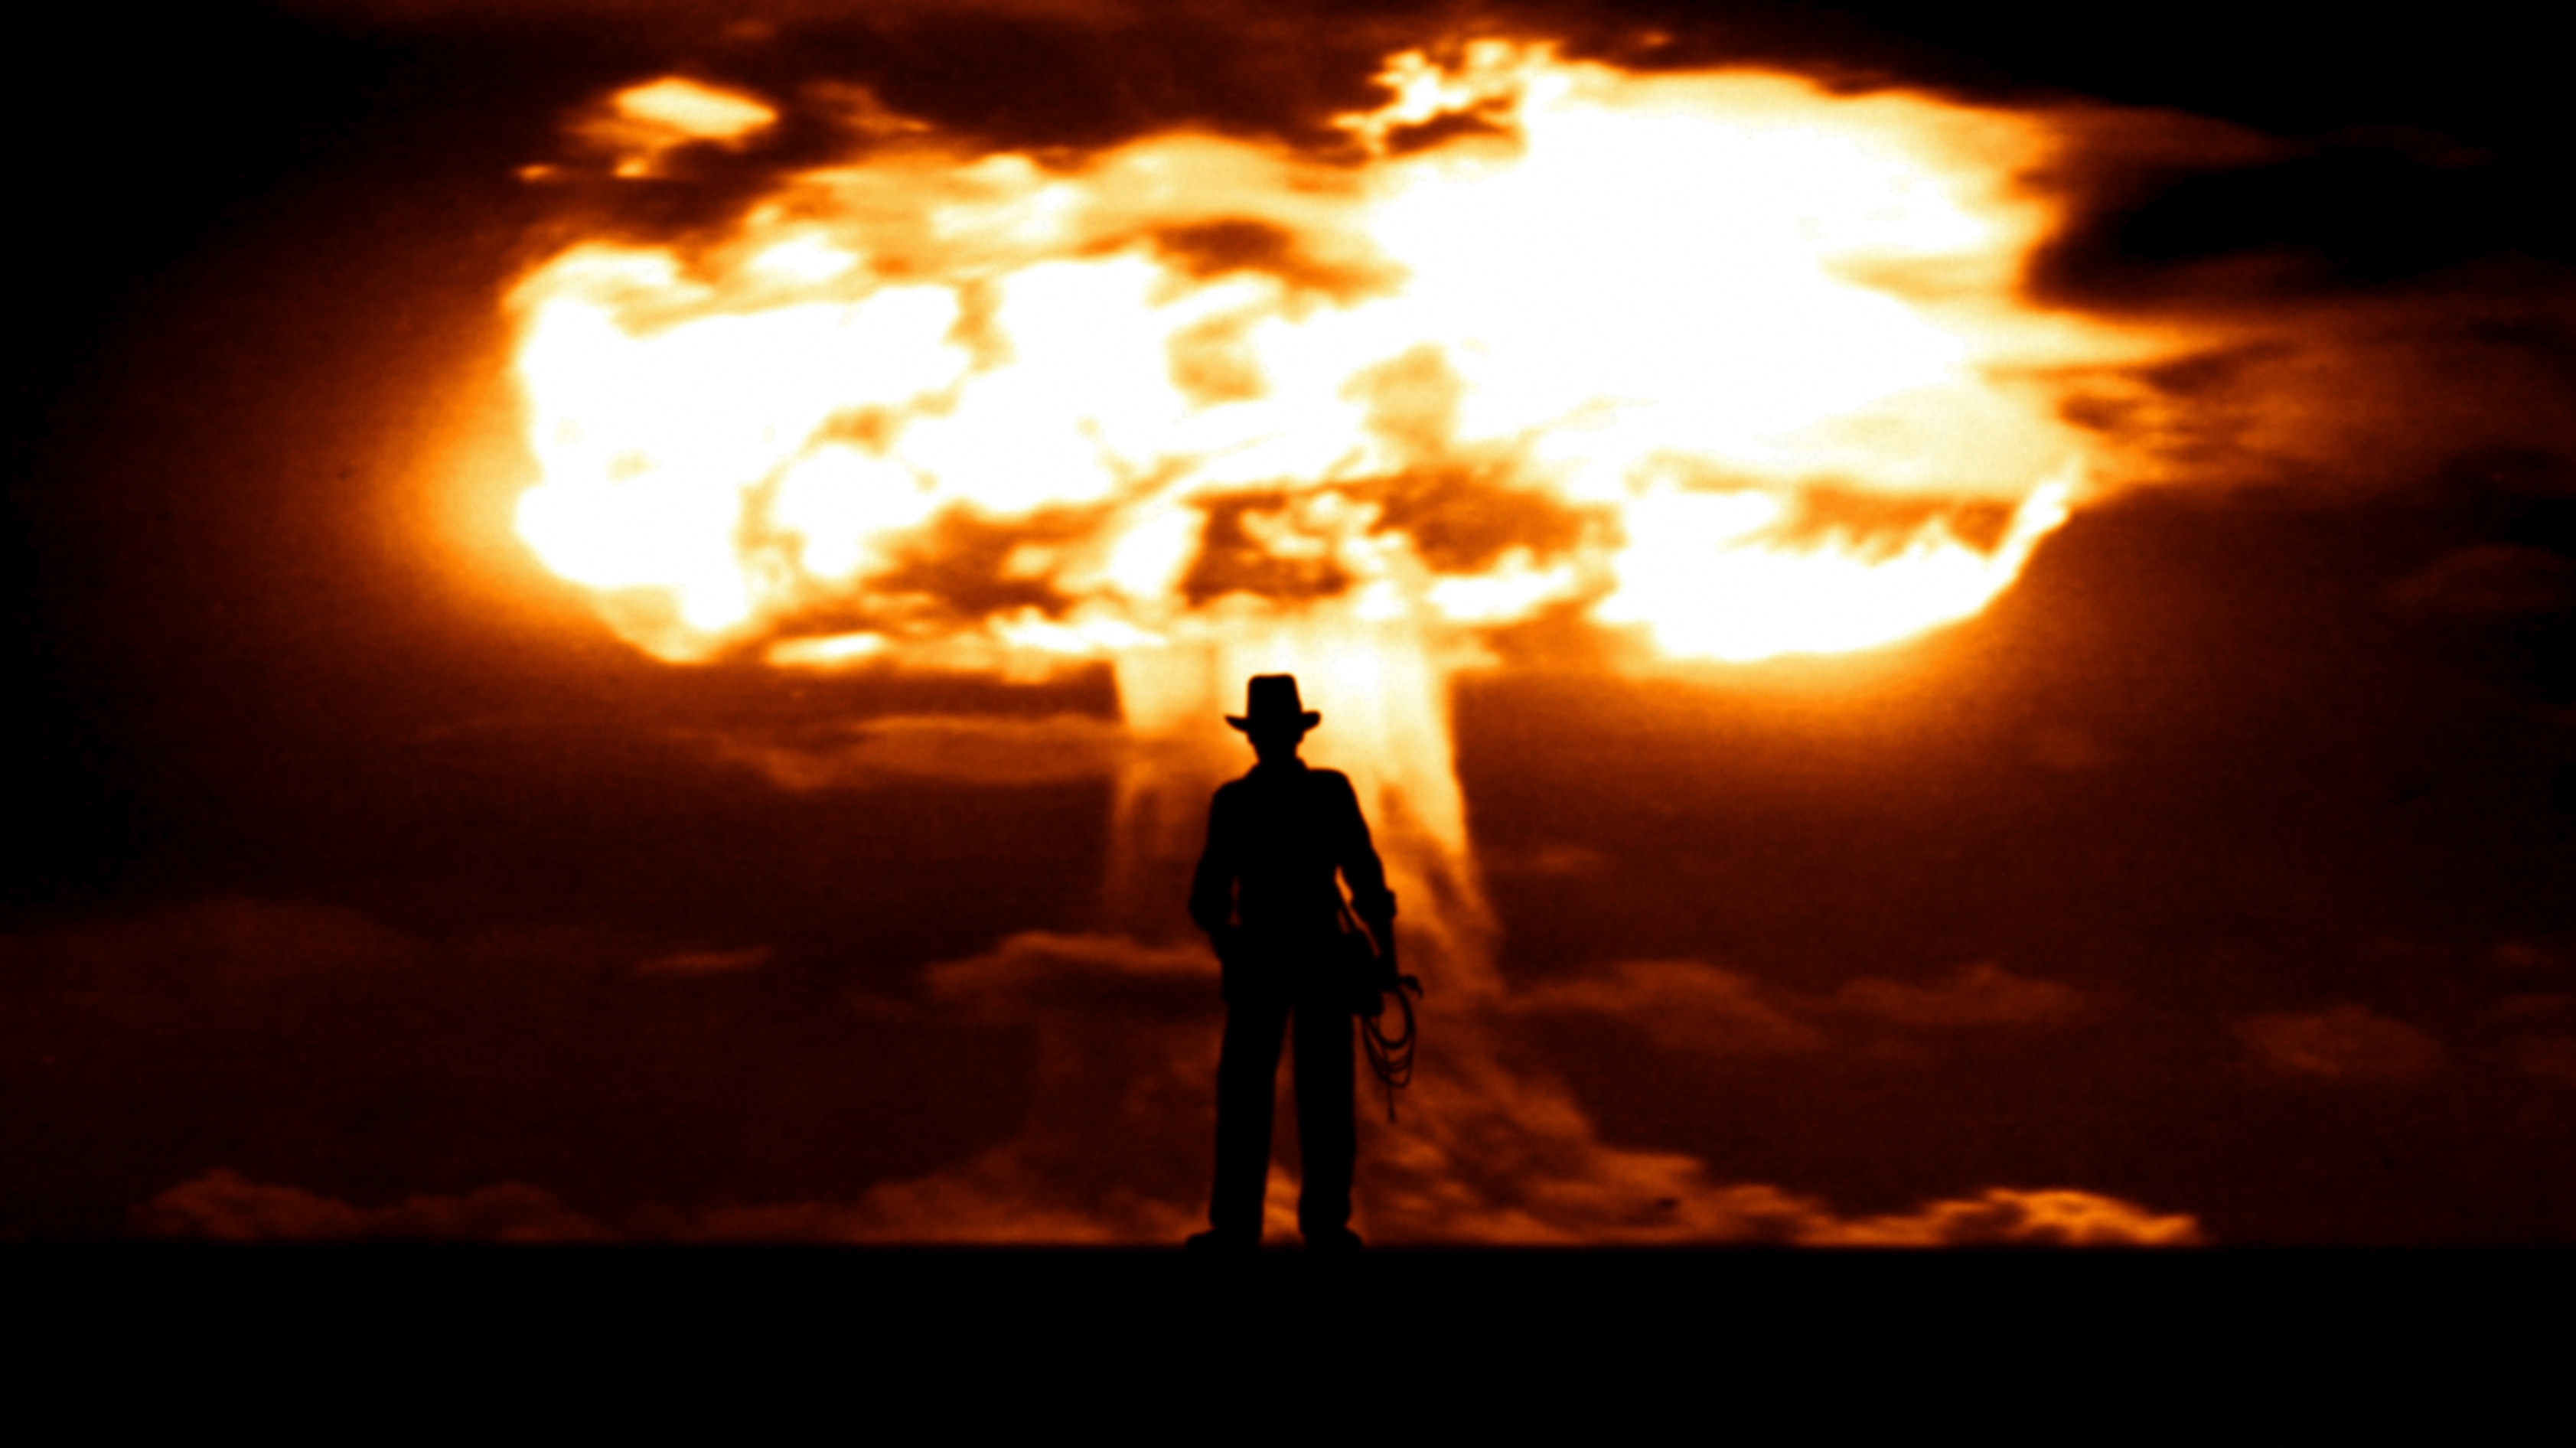 Indiana Jones Fire Background - HD Wallpaper 